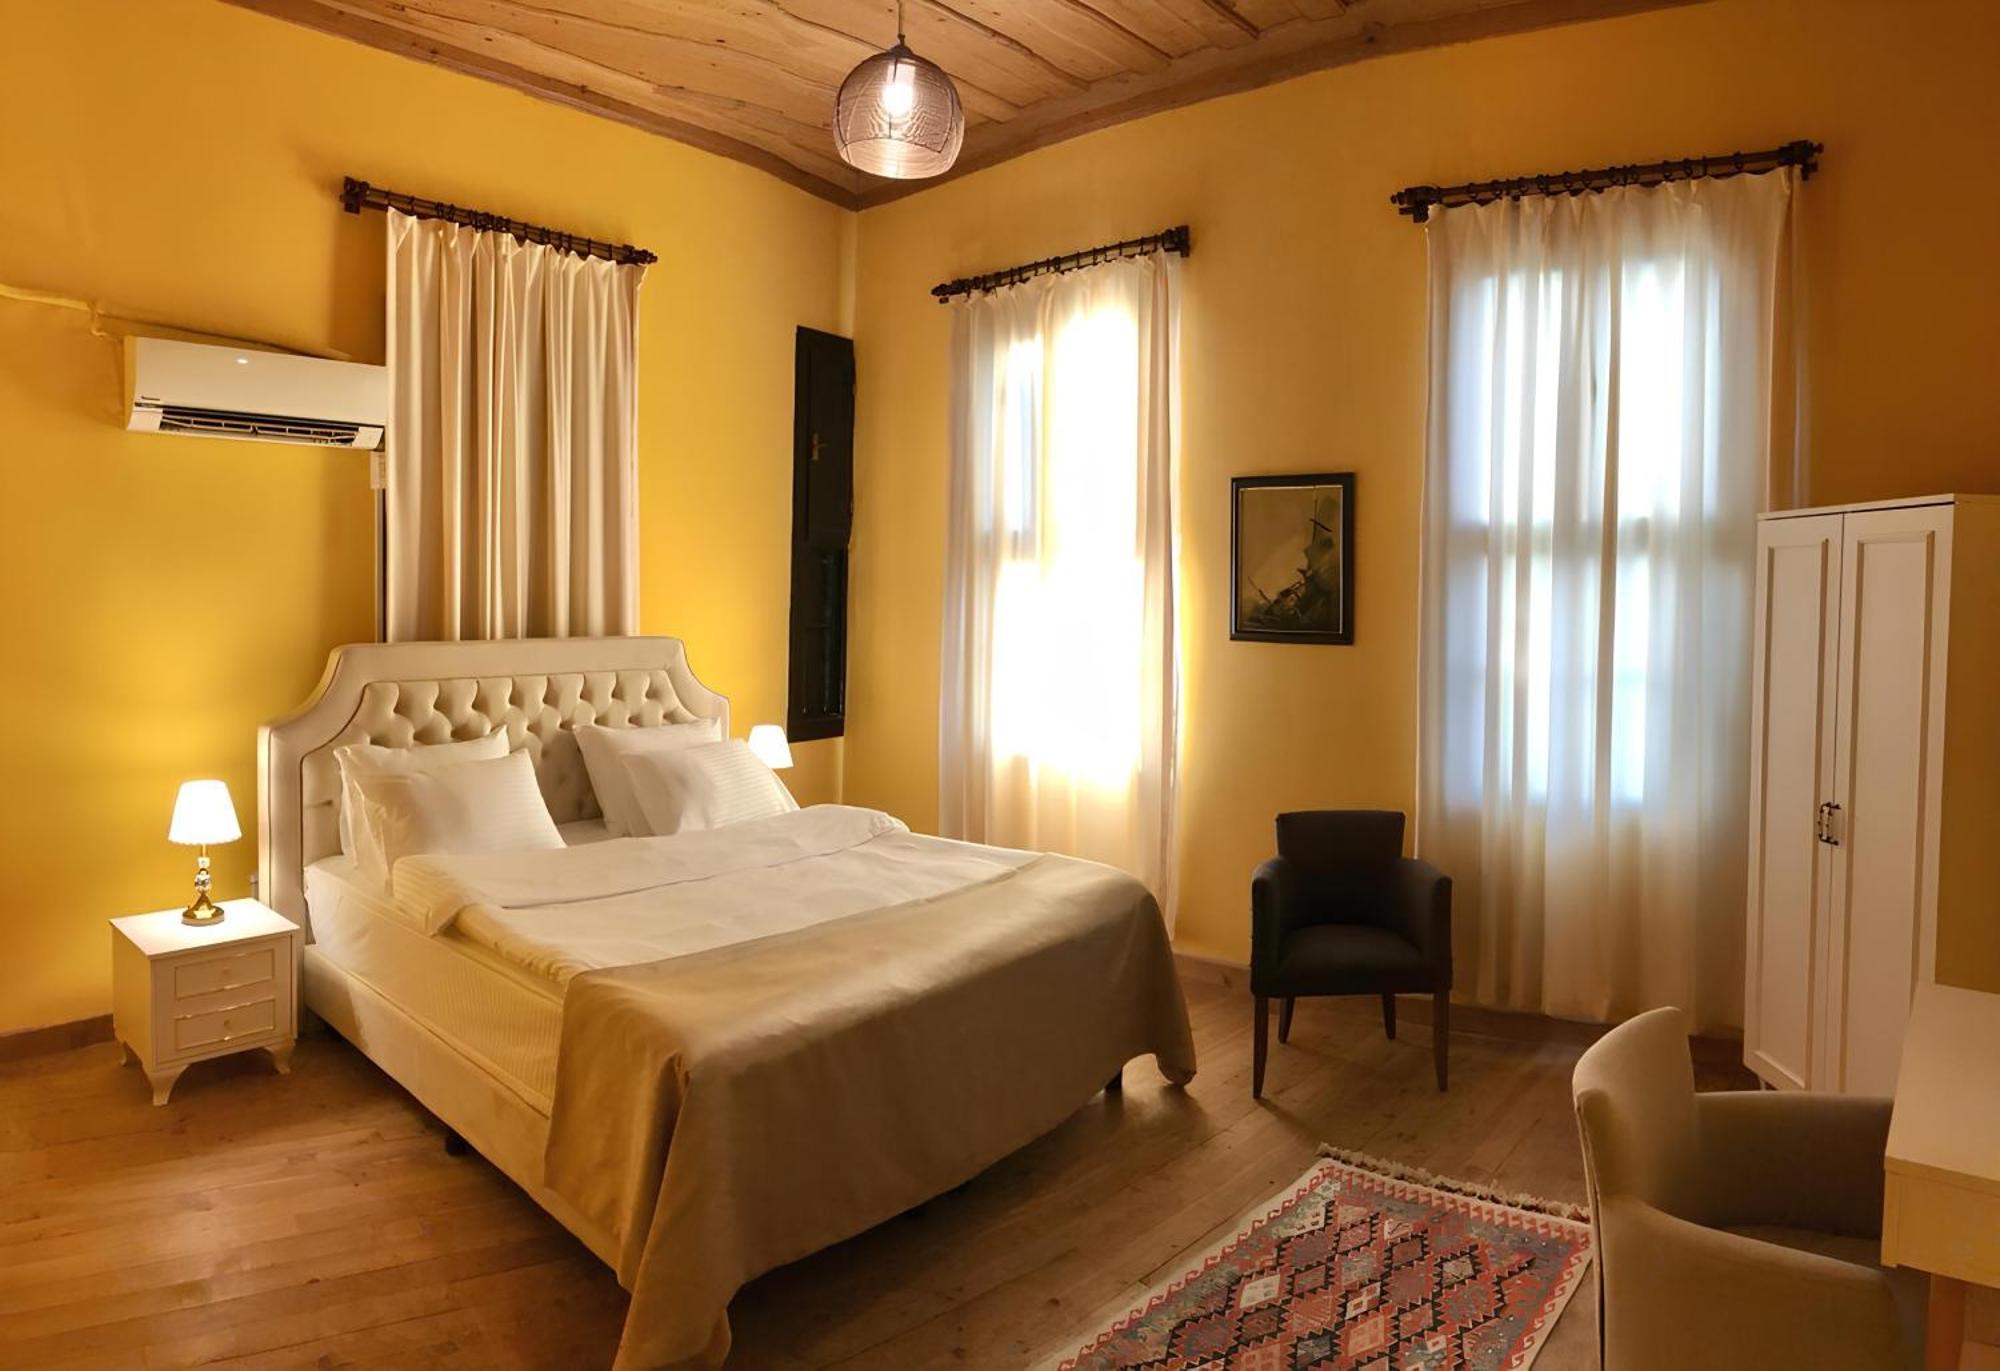 Grace Lounge Suite Antalya Exterior foto